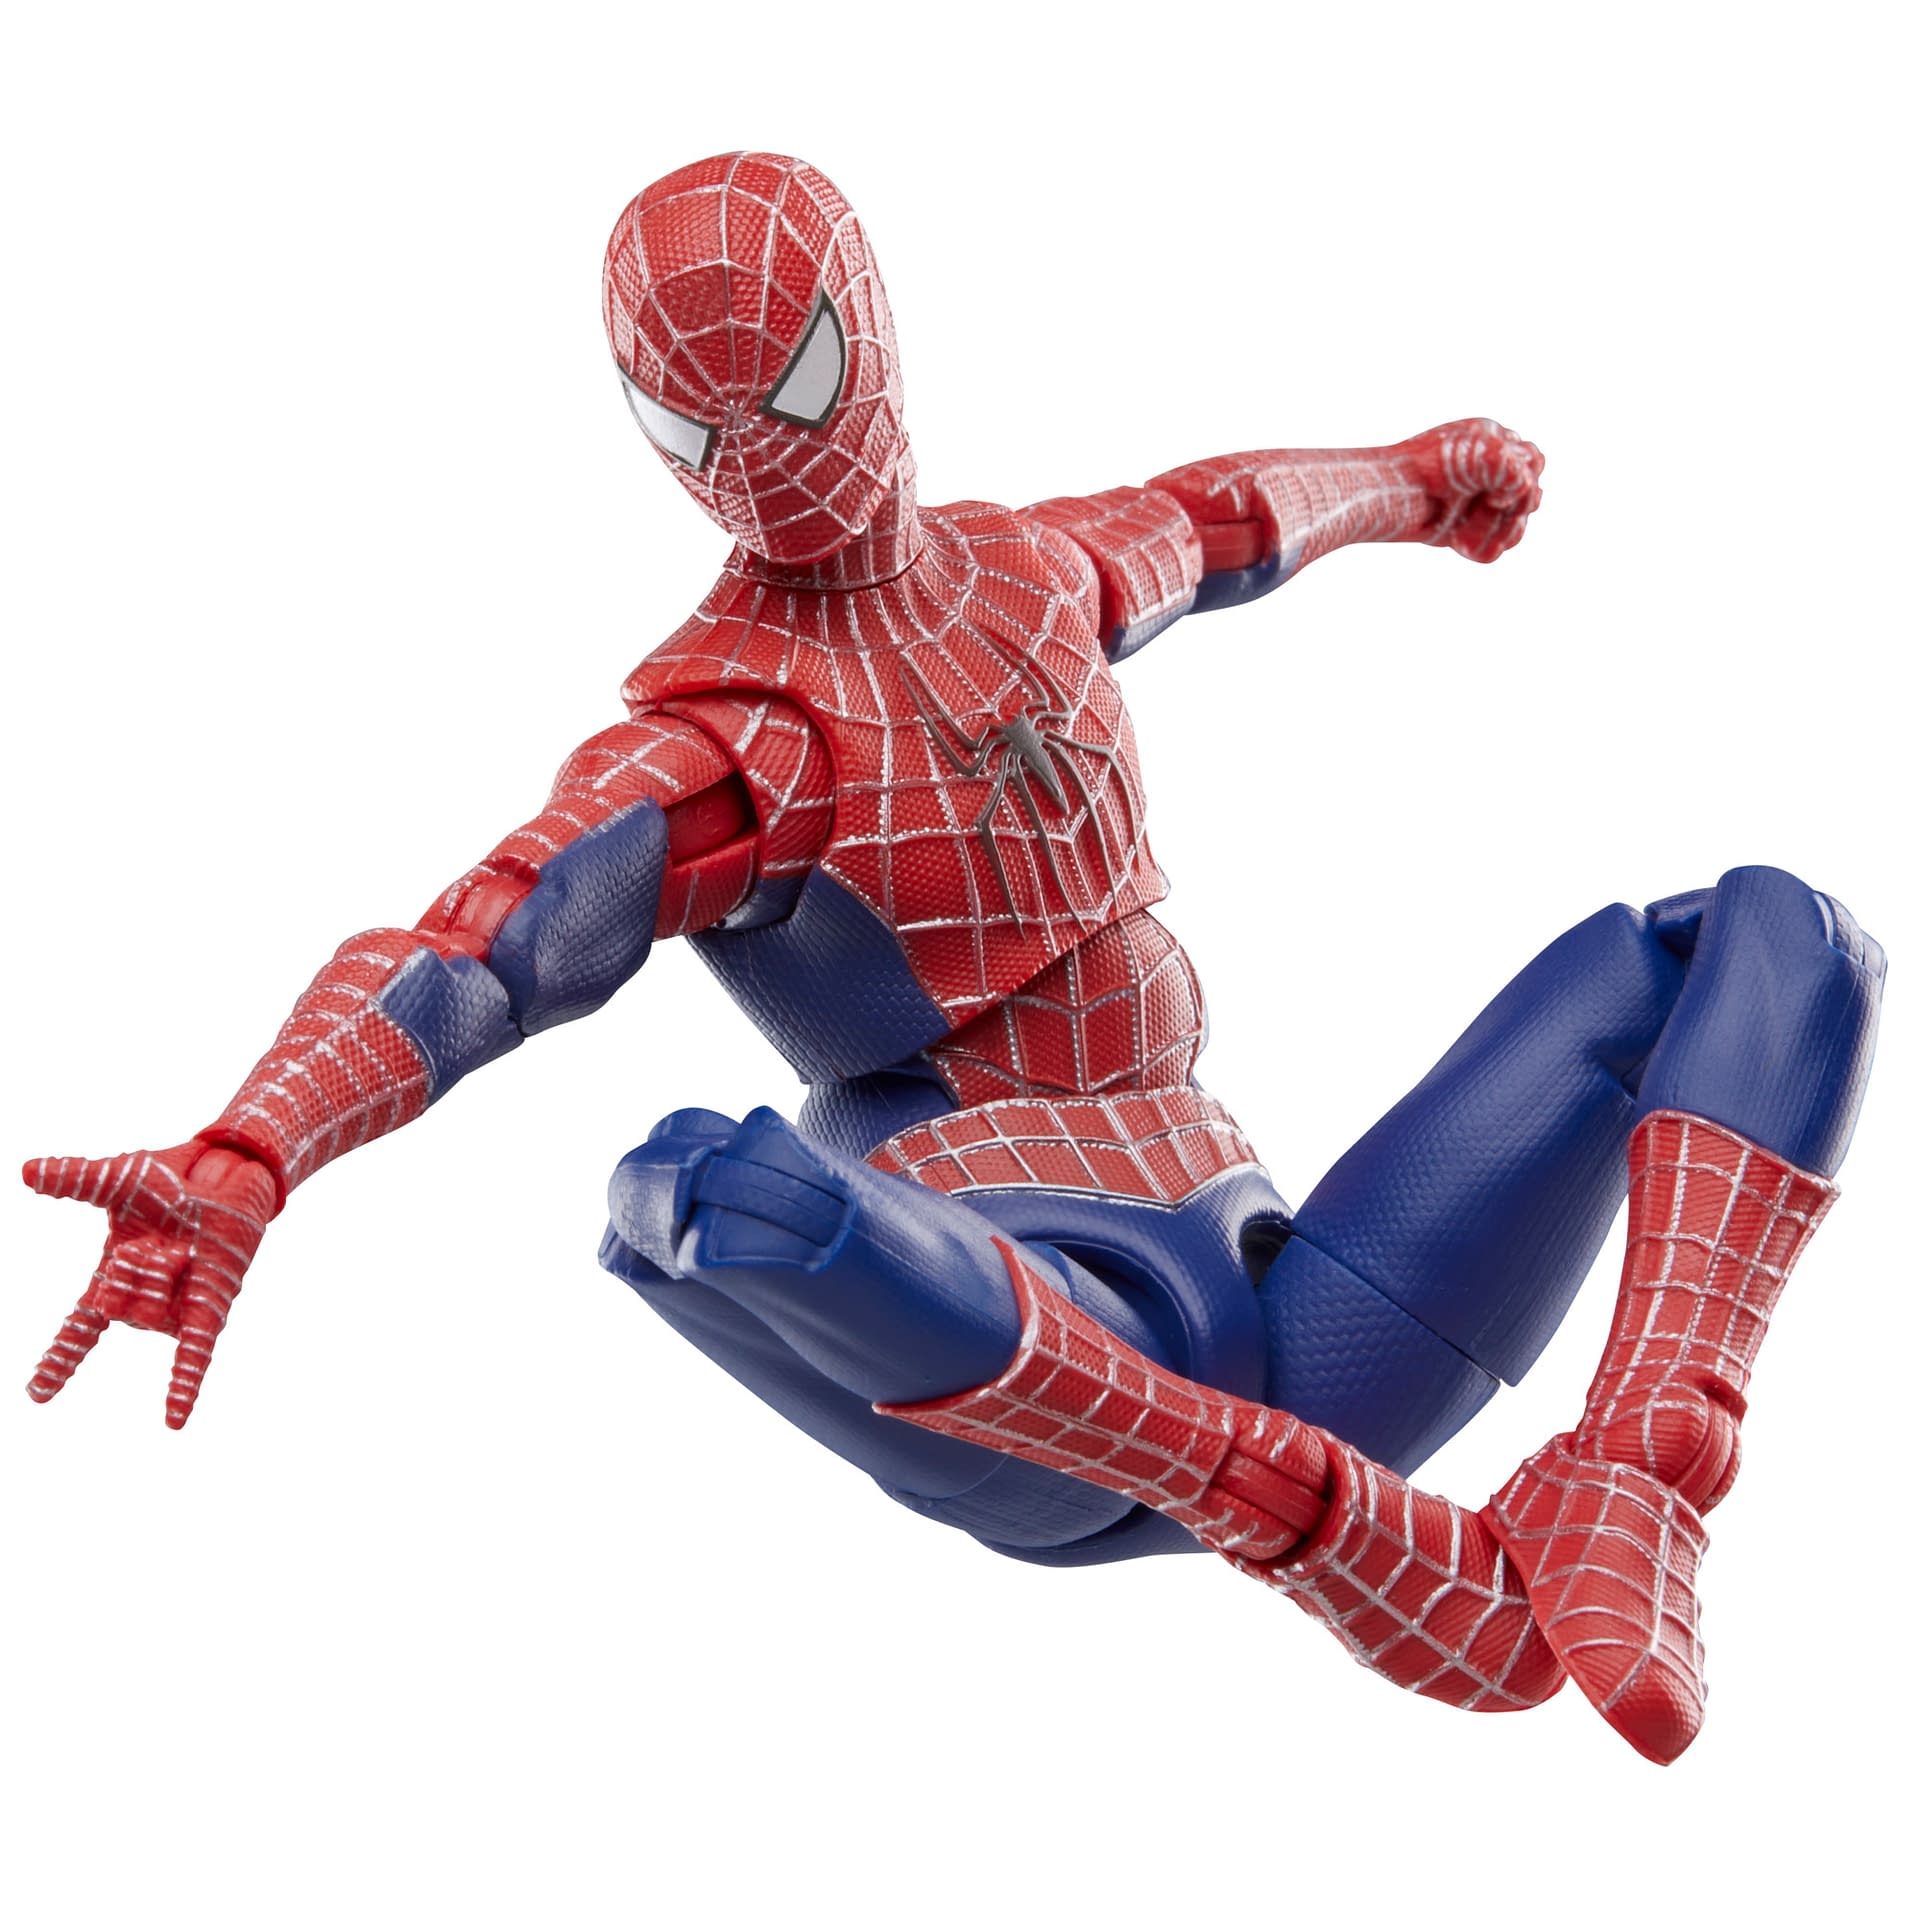 Tobey Maguire Spider-Man Gets a New Unmasked Marvel Legends Figure